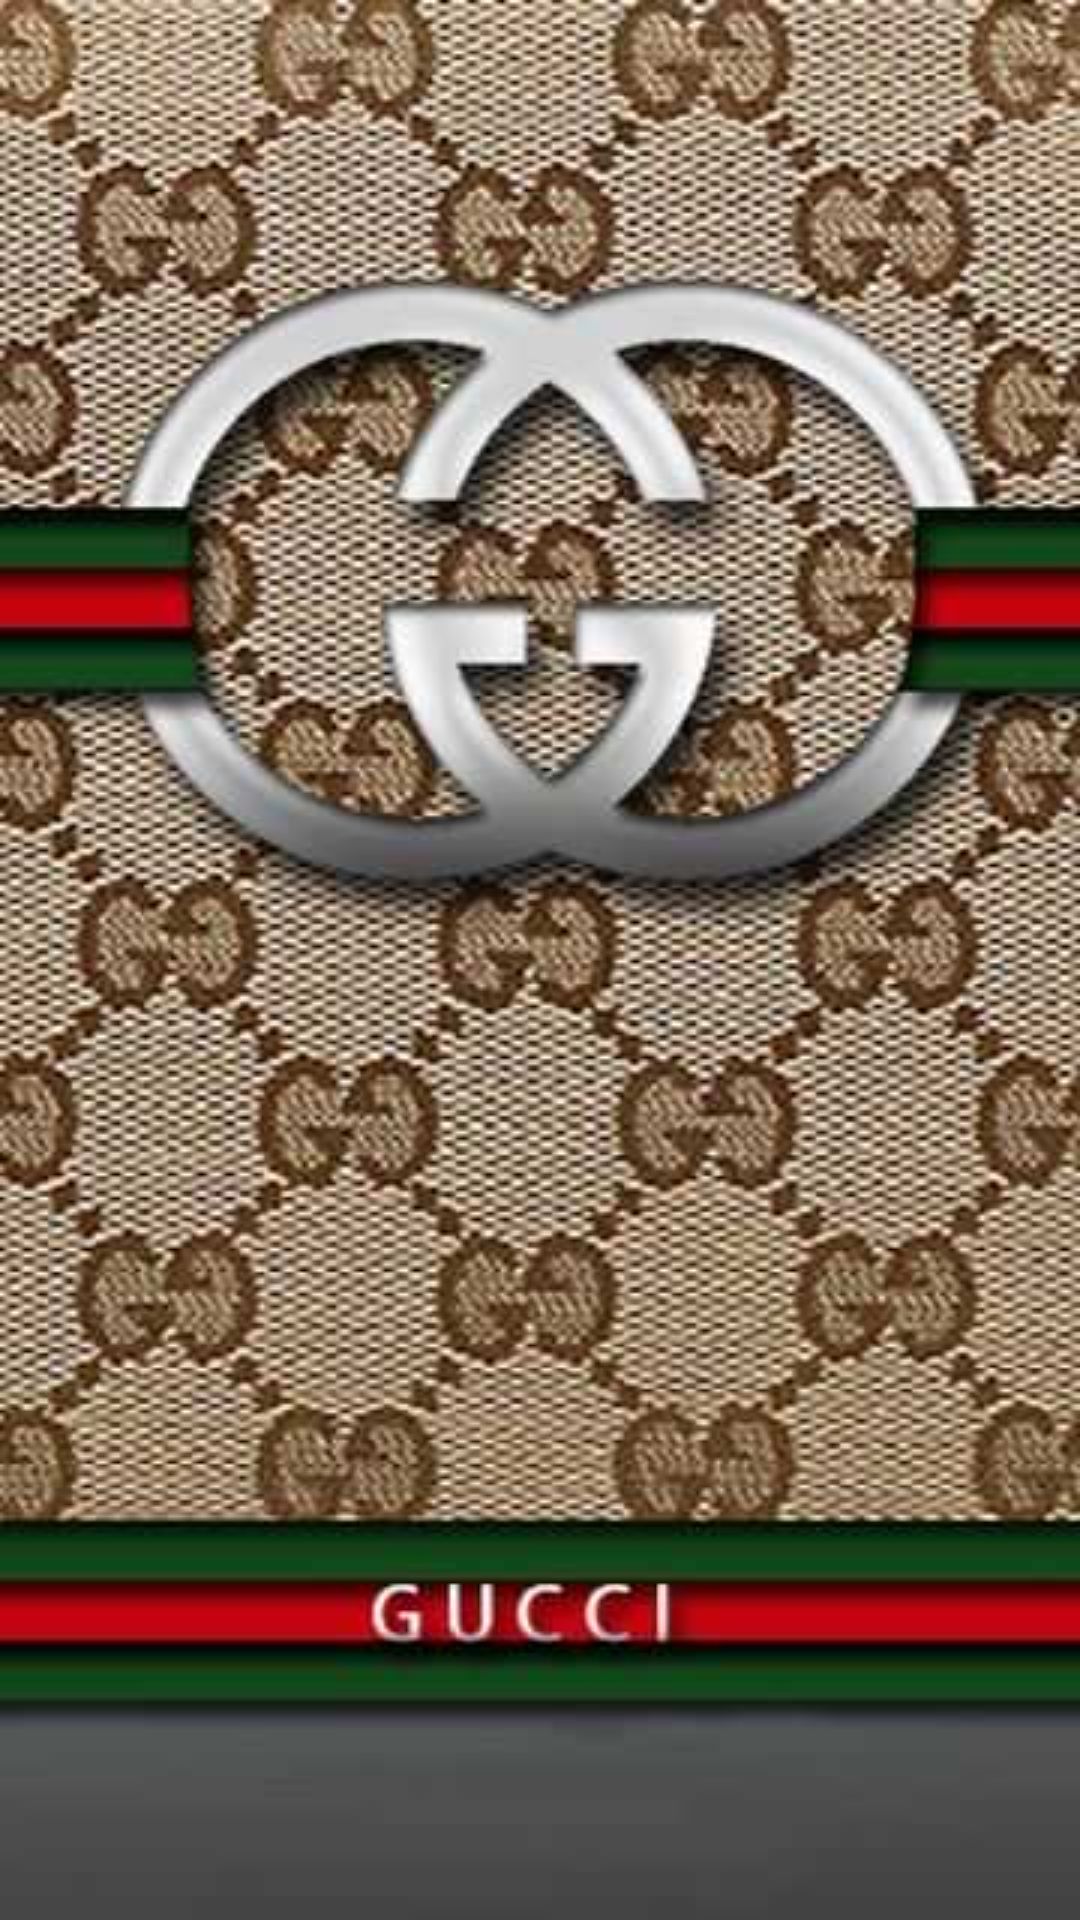 Cool Supreme Gucci Wallpapers - Top Free Cool Supreme Gucci